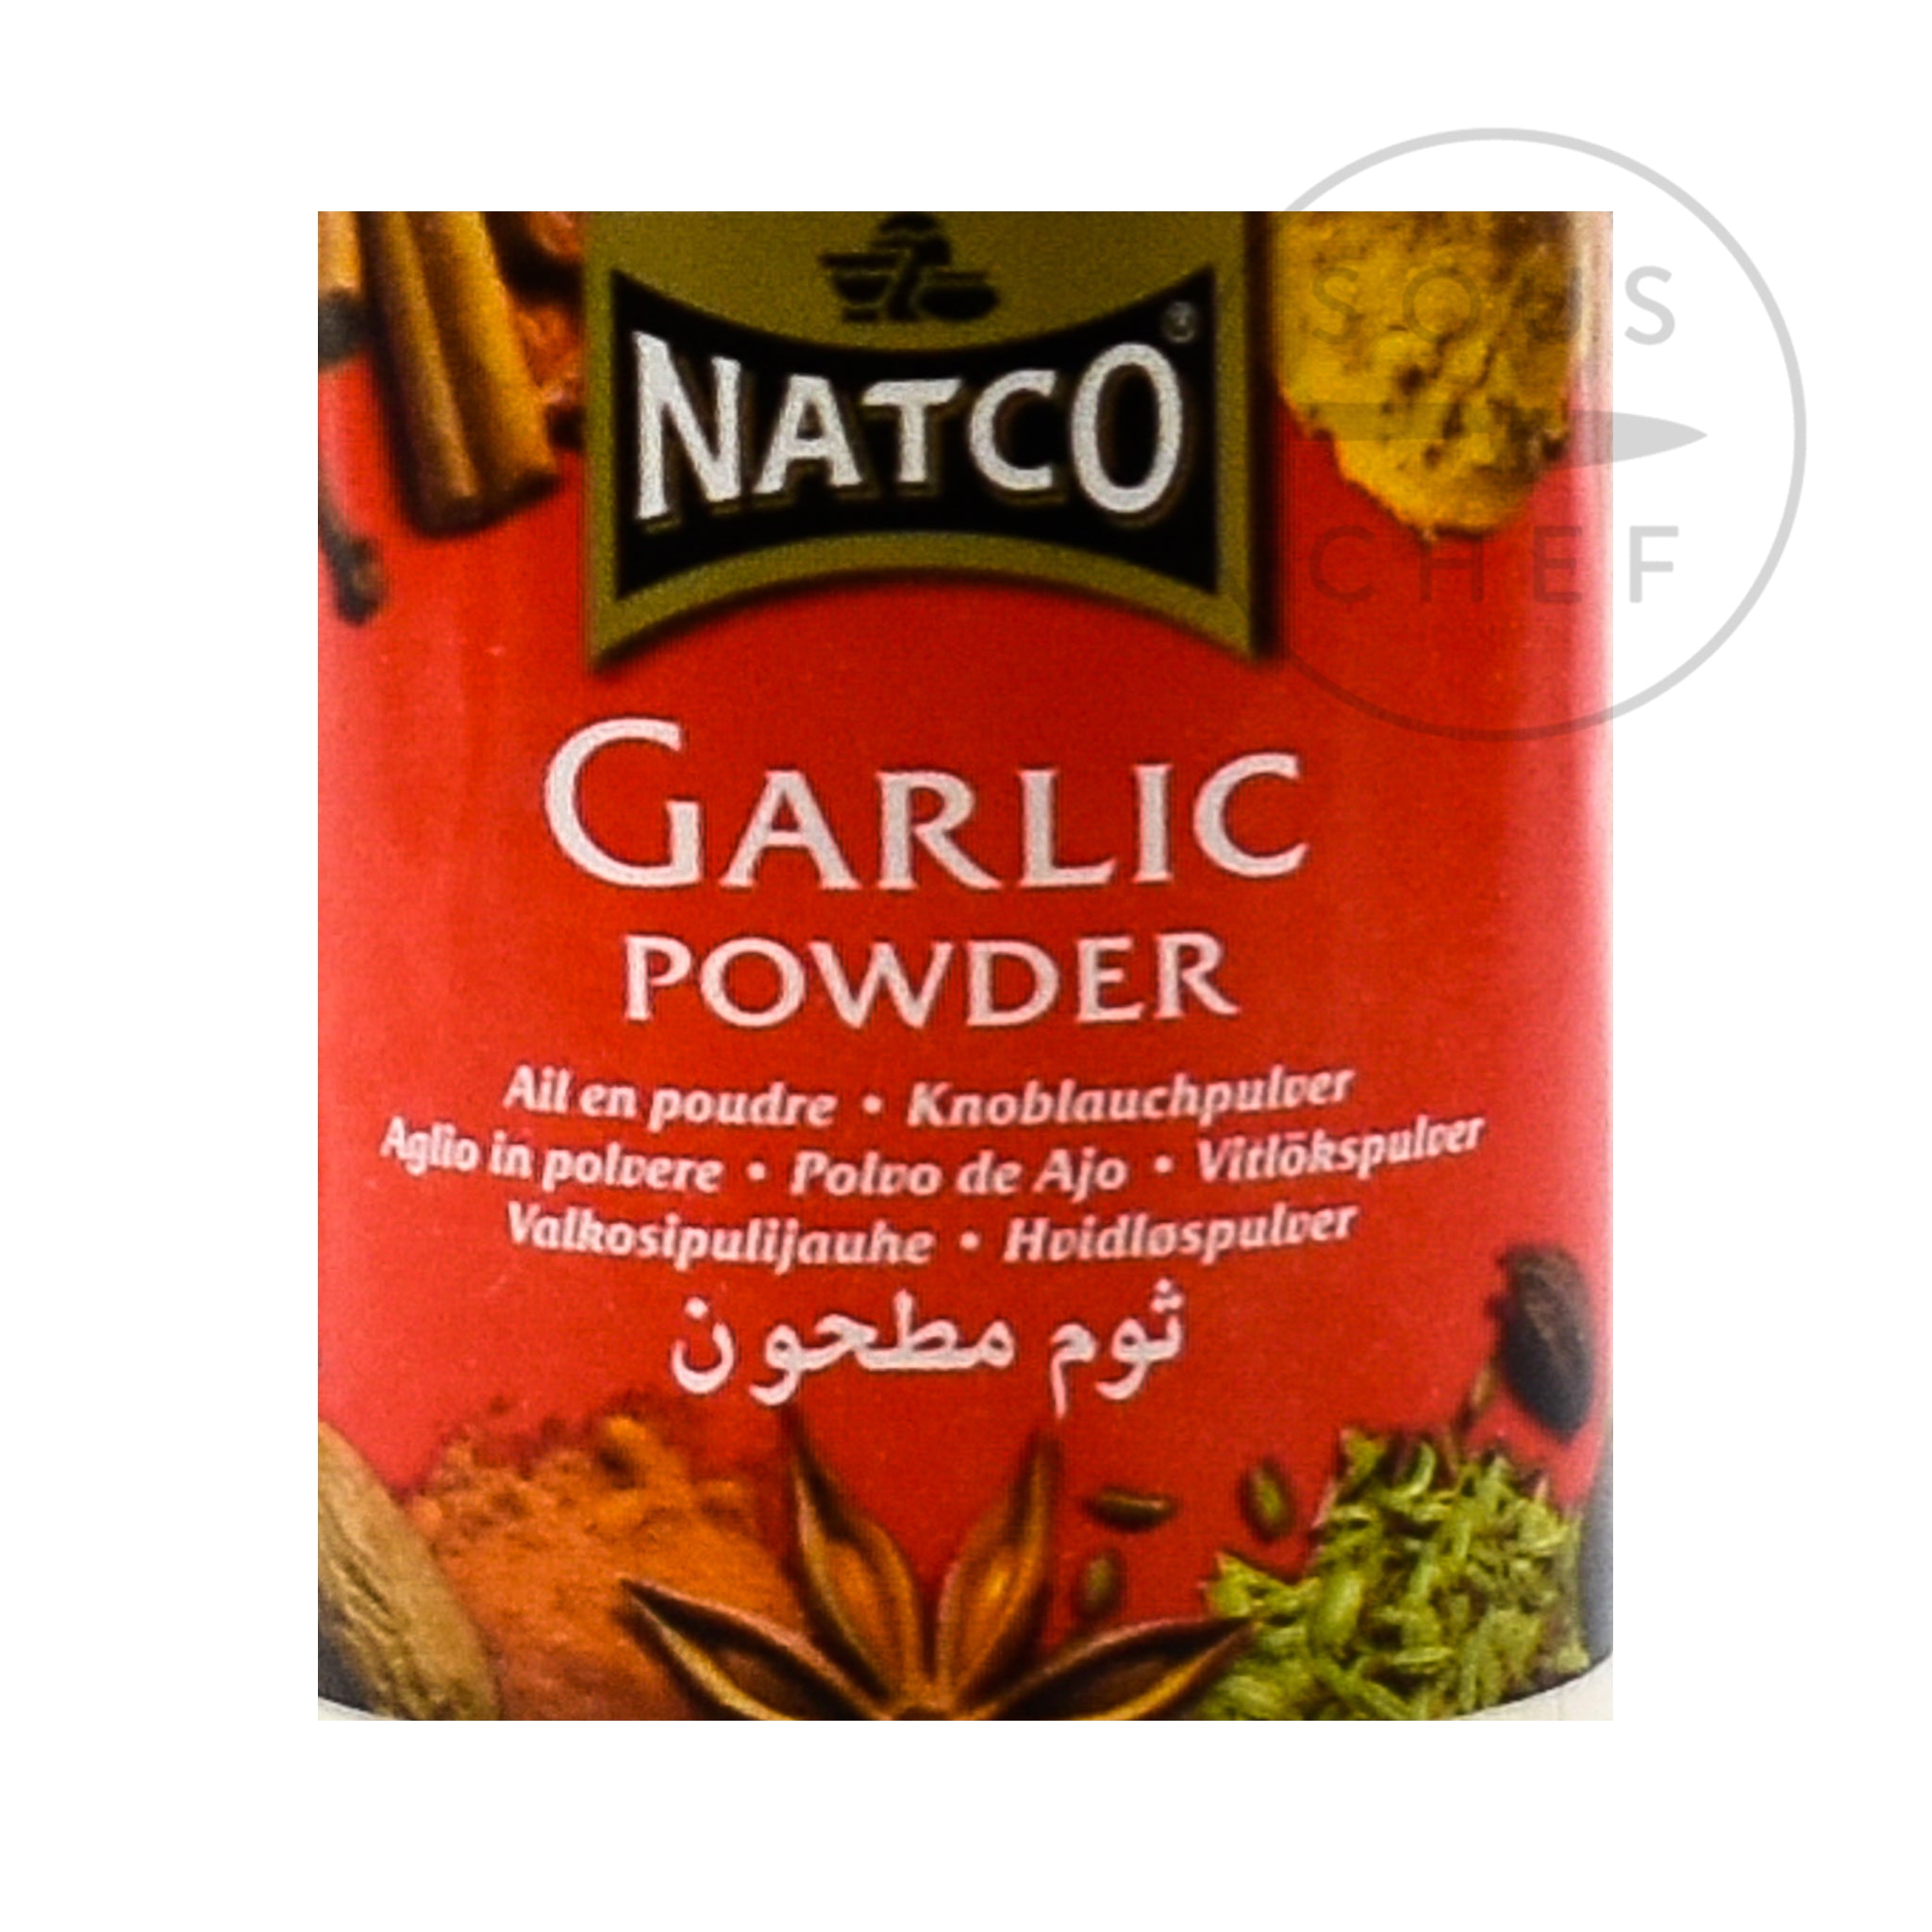 Natco Garlic Powder, 100g